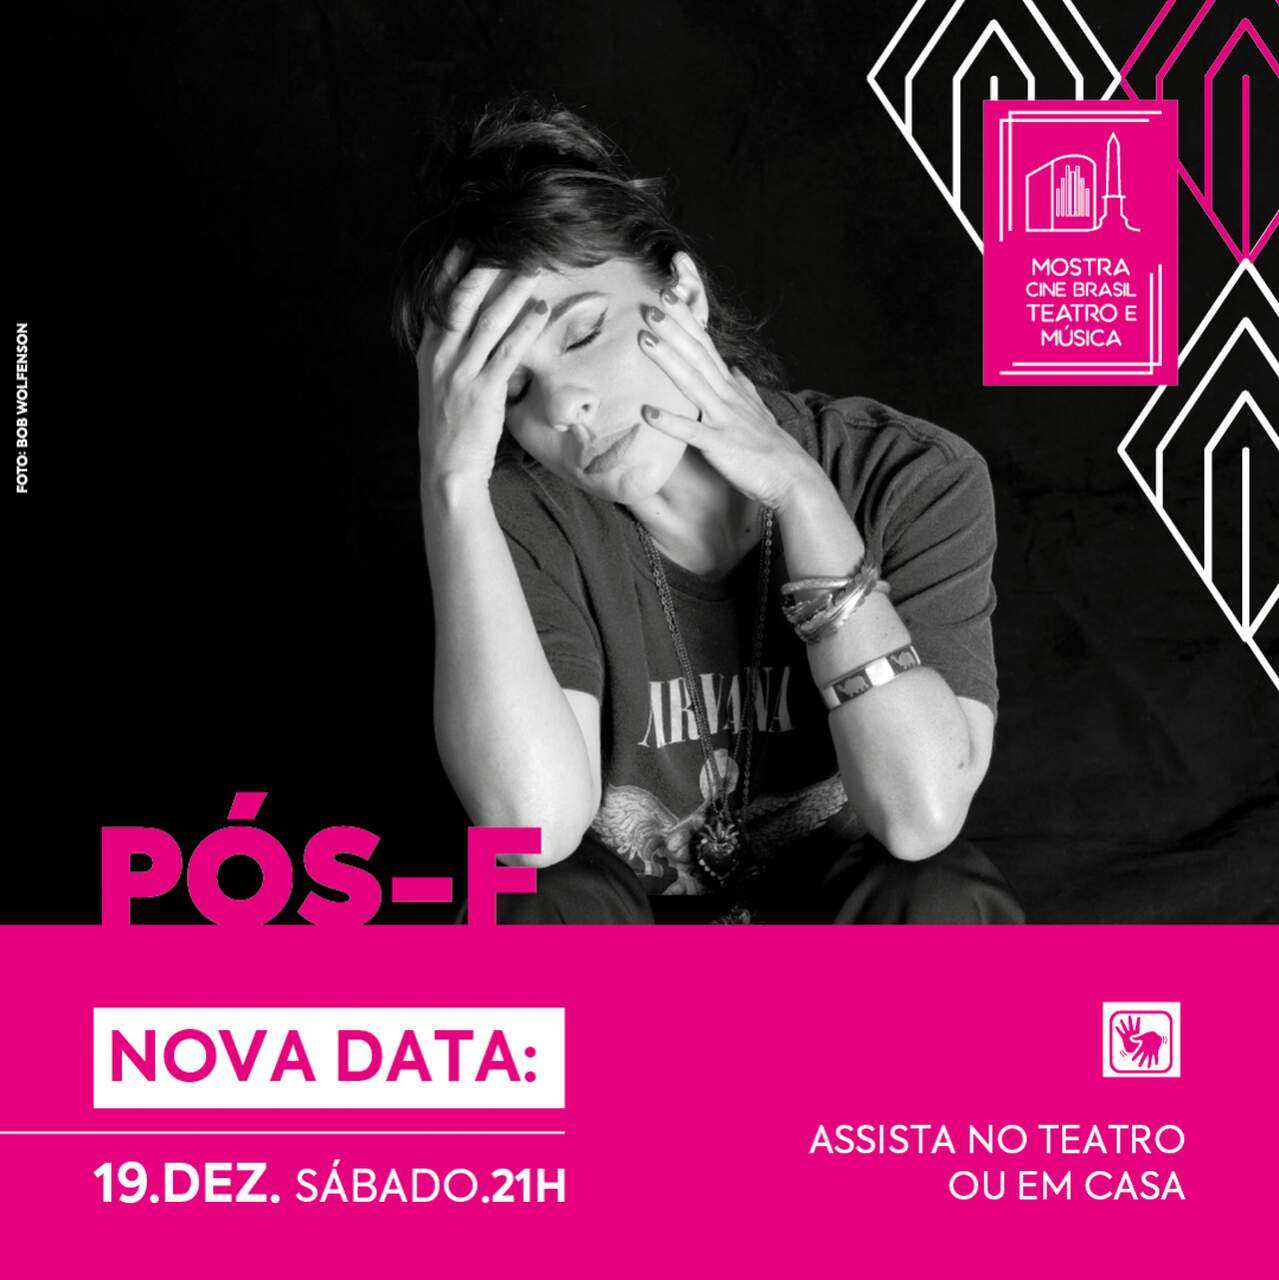 Espetáculo: "Pós-F" - Cine Theatro Brasil Vallourec